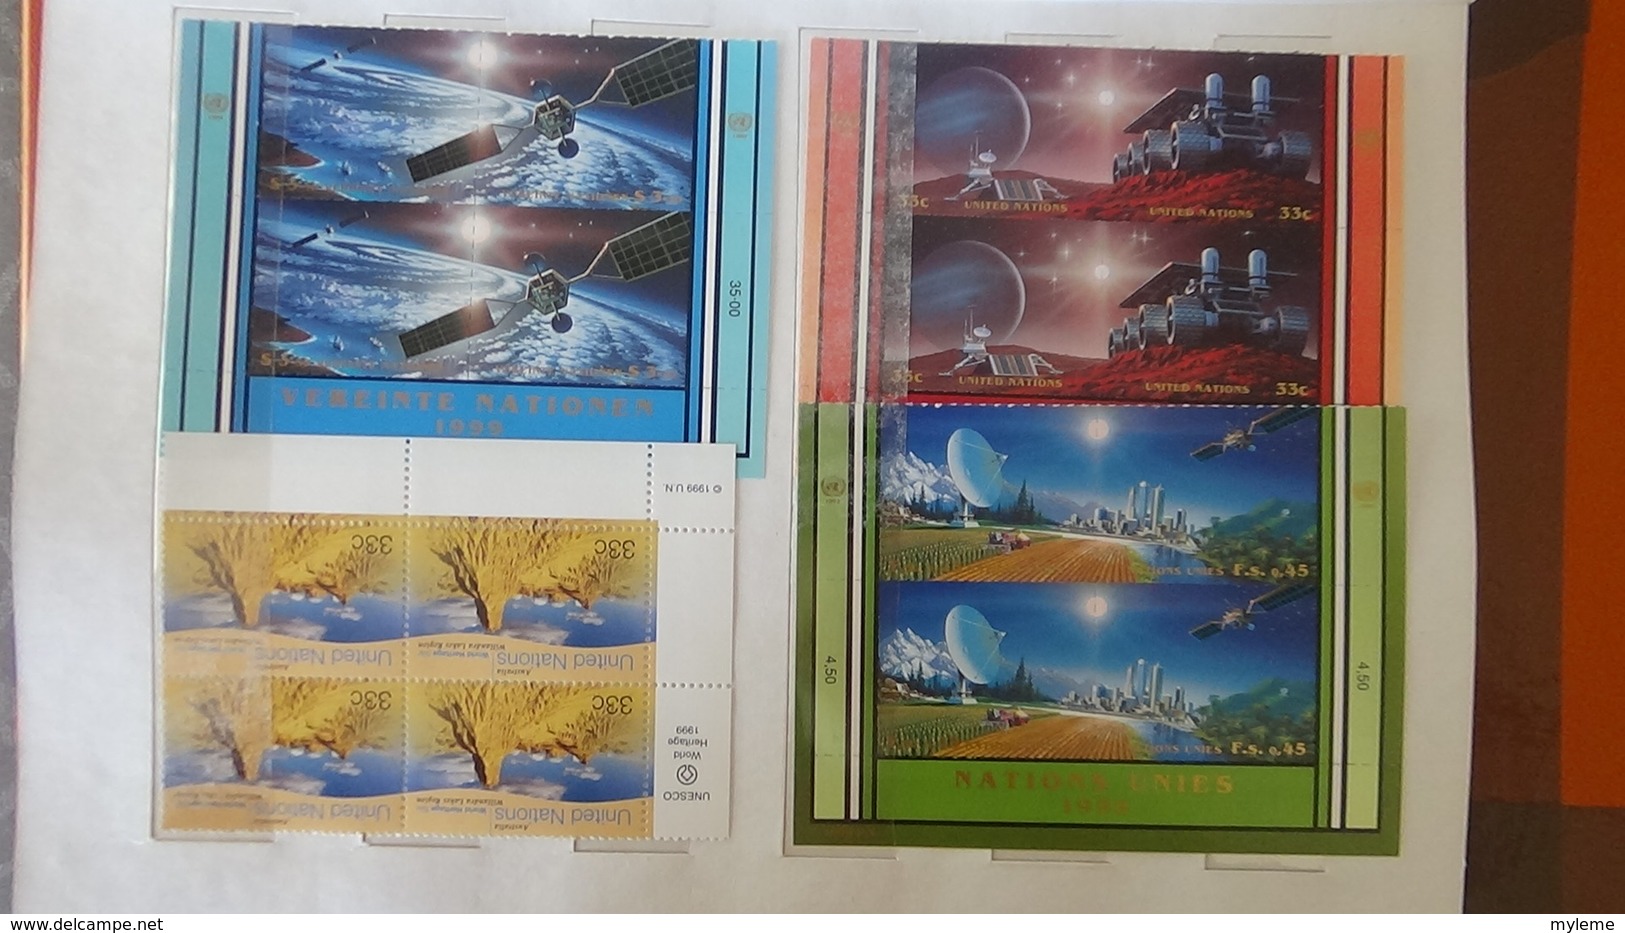 Album de timbres et blocs des Nations Unies. A saisir  !!!